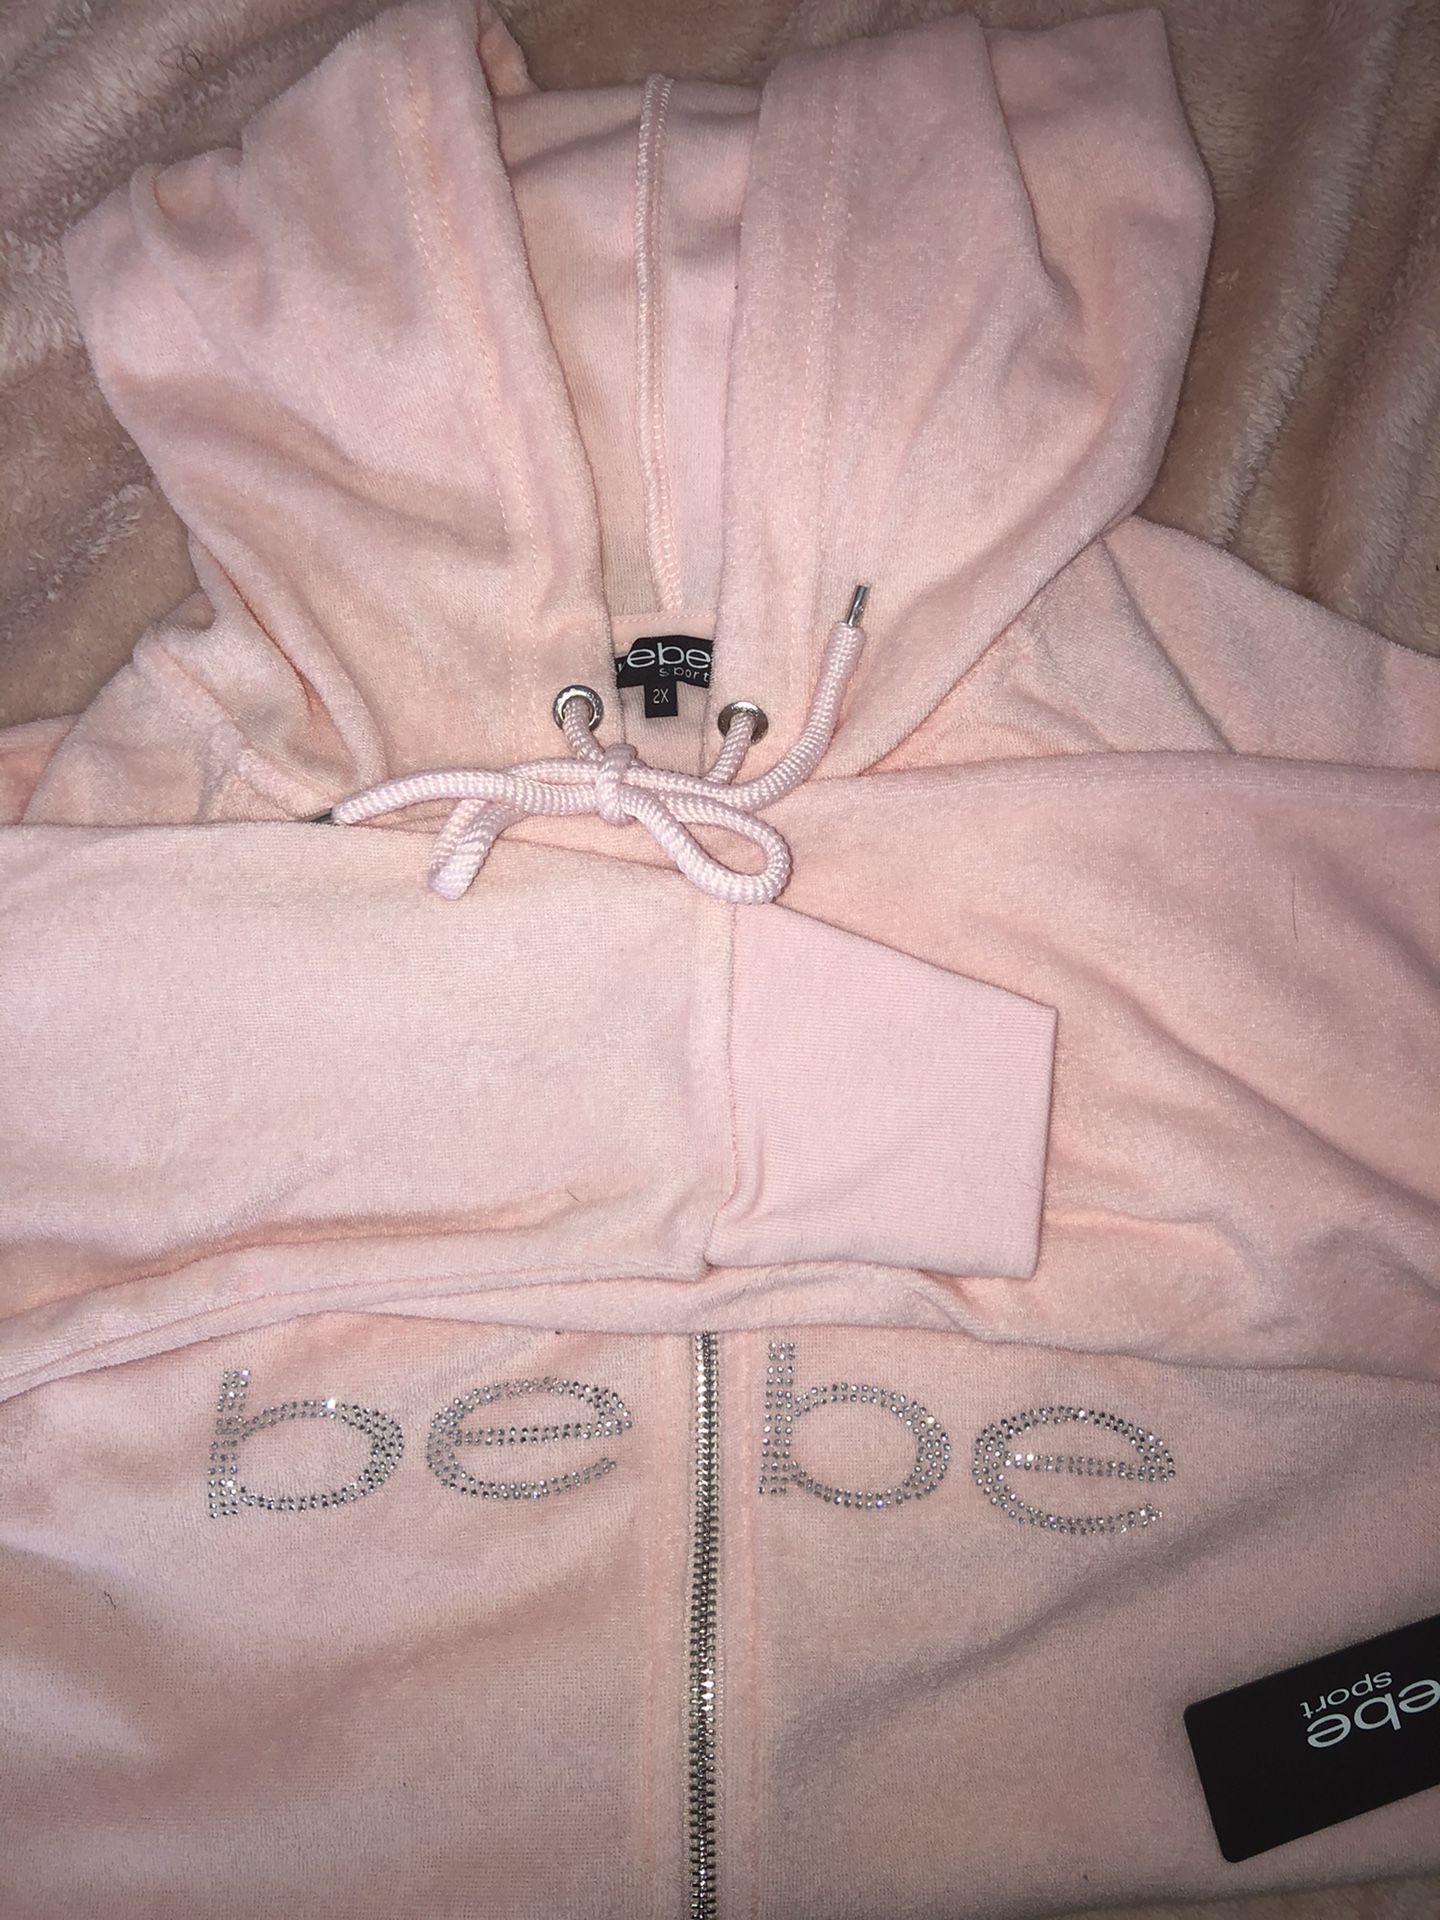 Bebe pink jacket